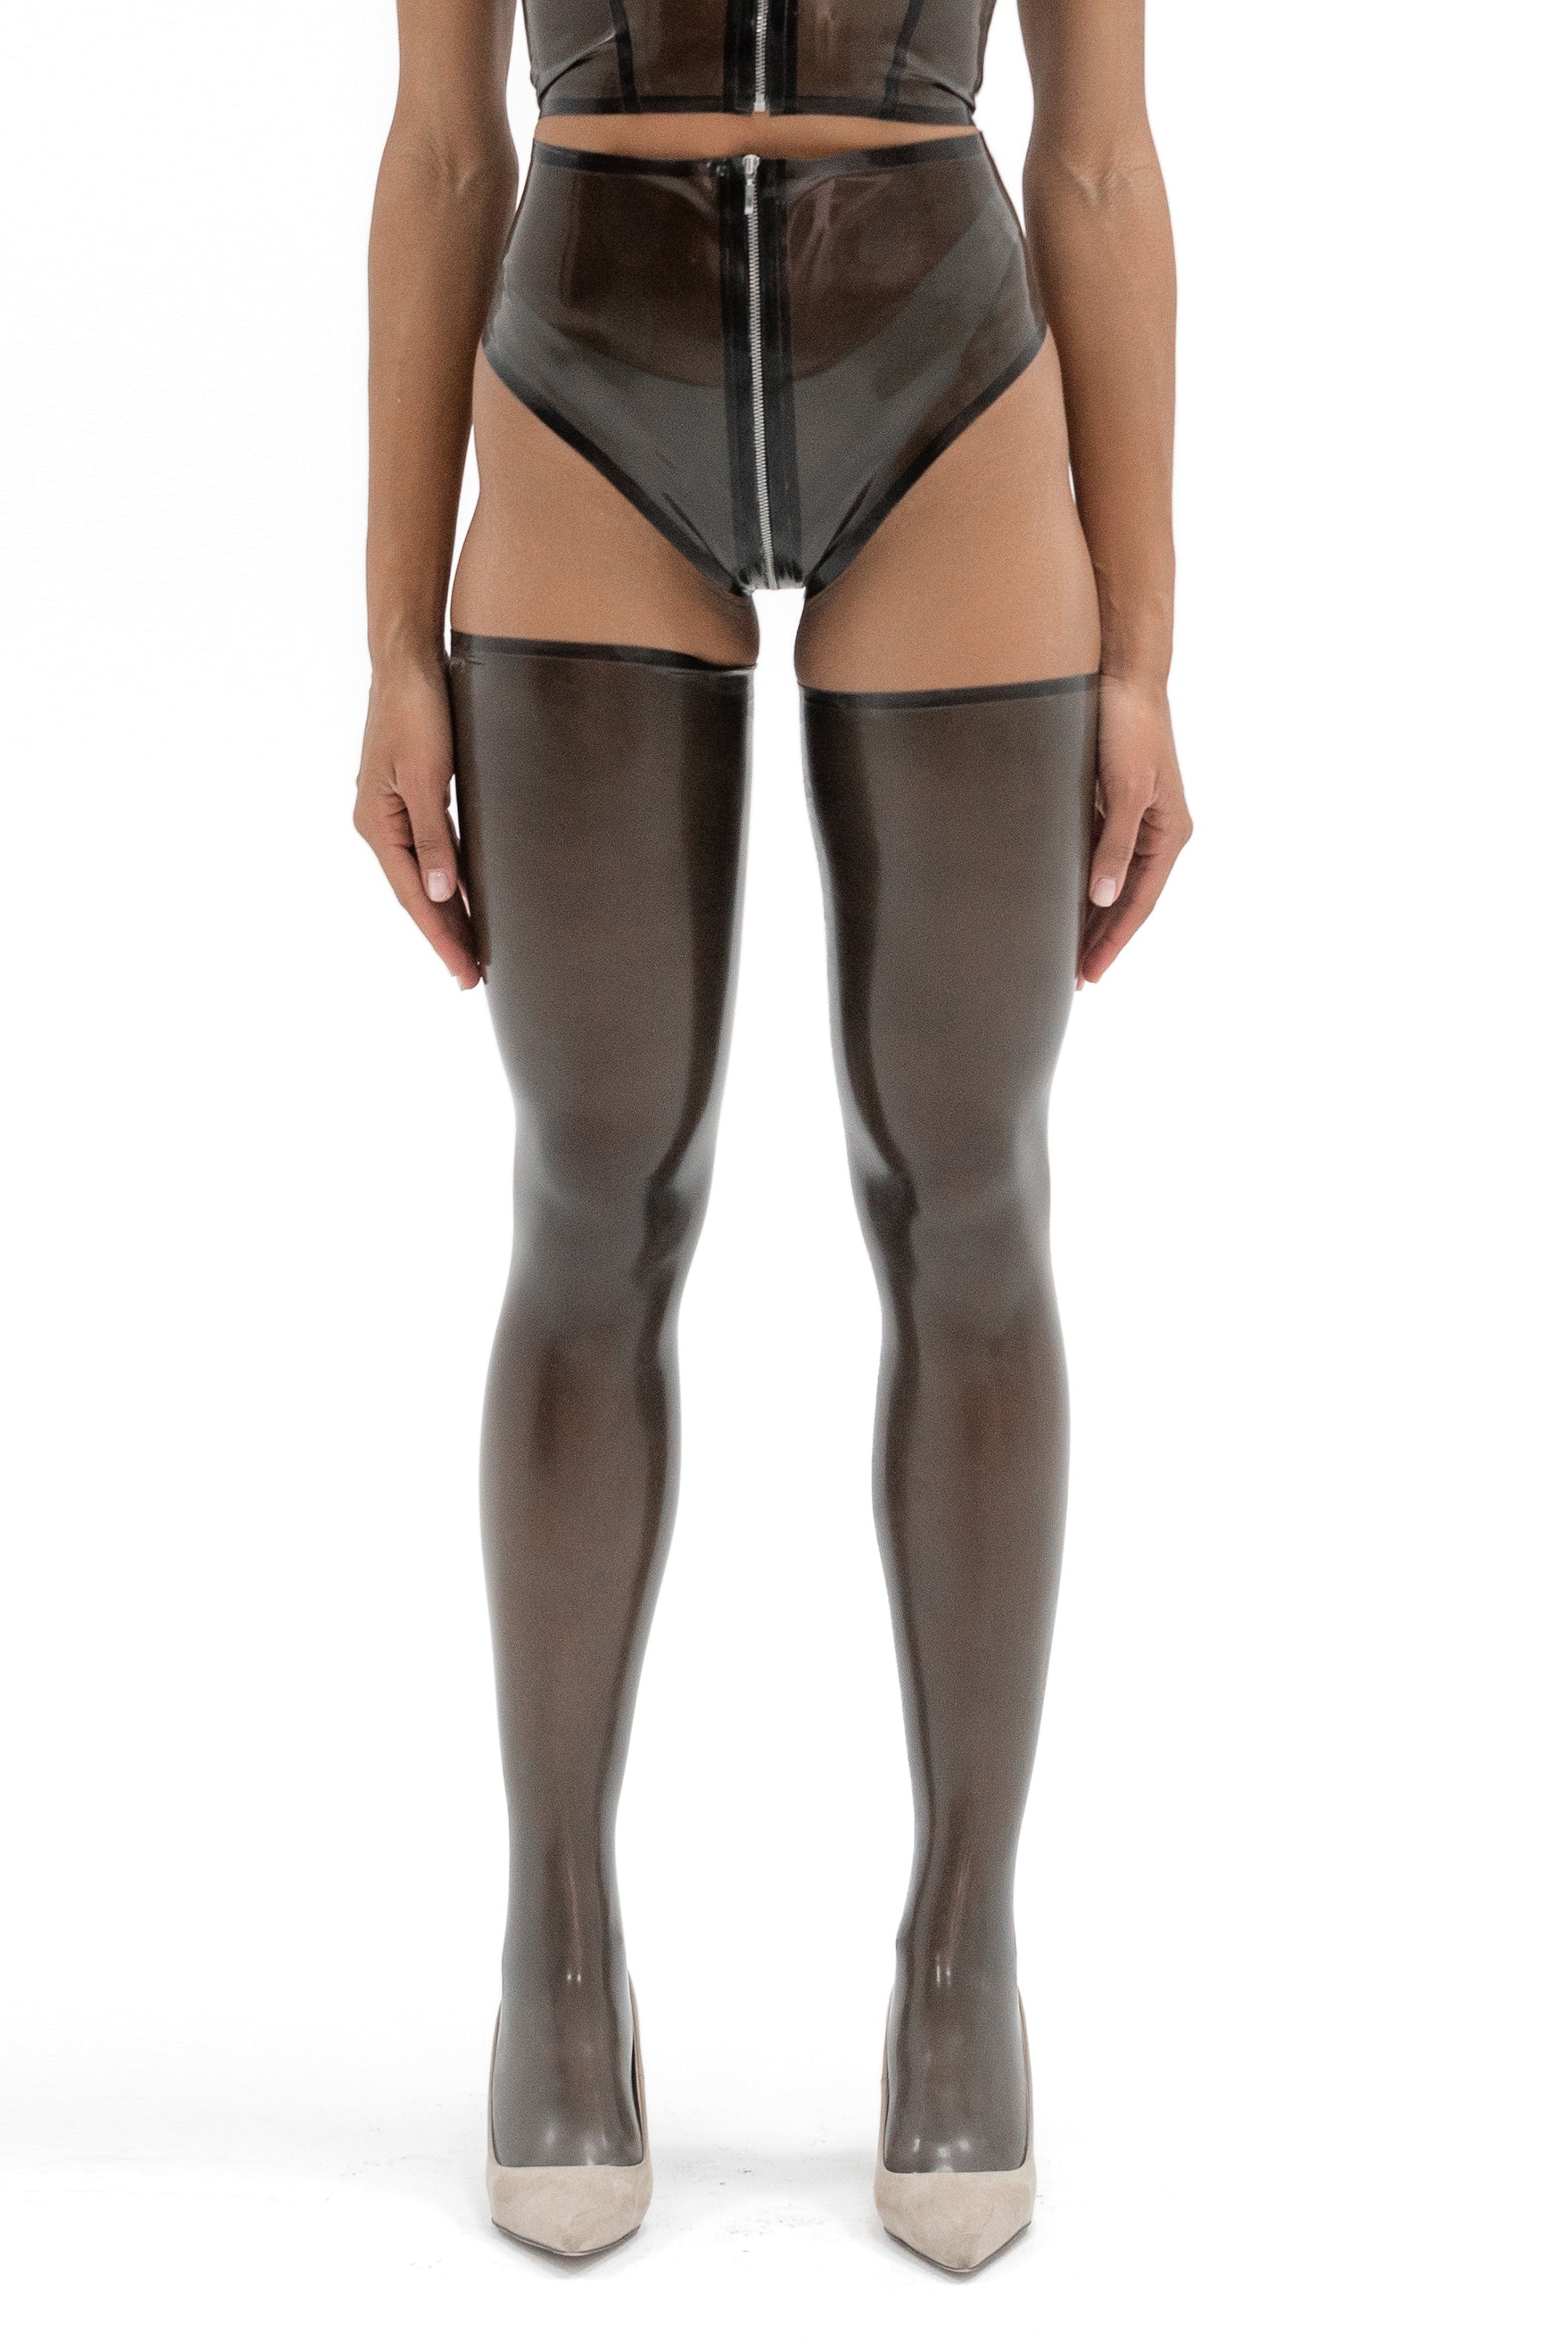 Semi-transparent Black Full-length Latex Stockings